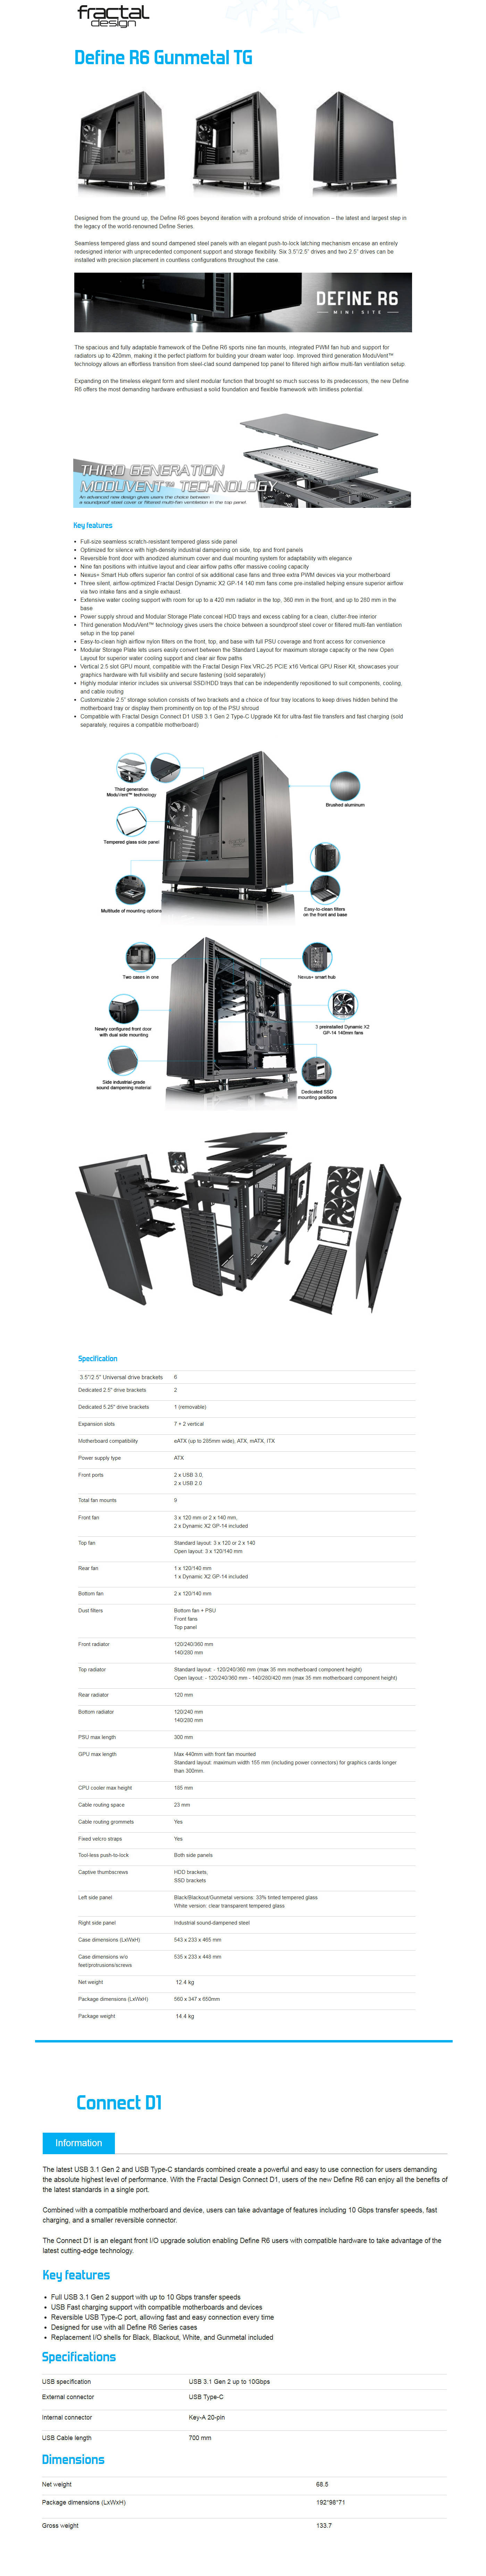  Buy Online Fractal Design Define R6 Mid Tower Case + Connect D1